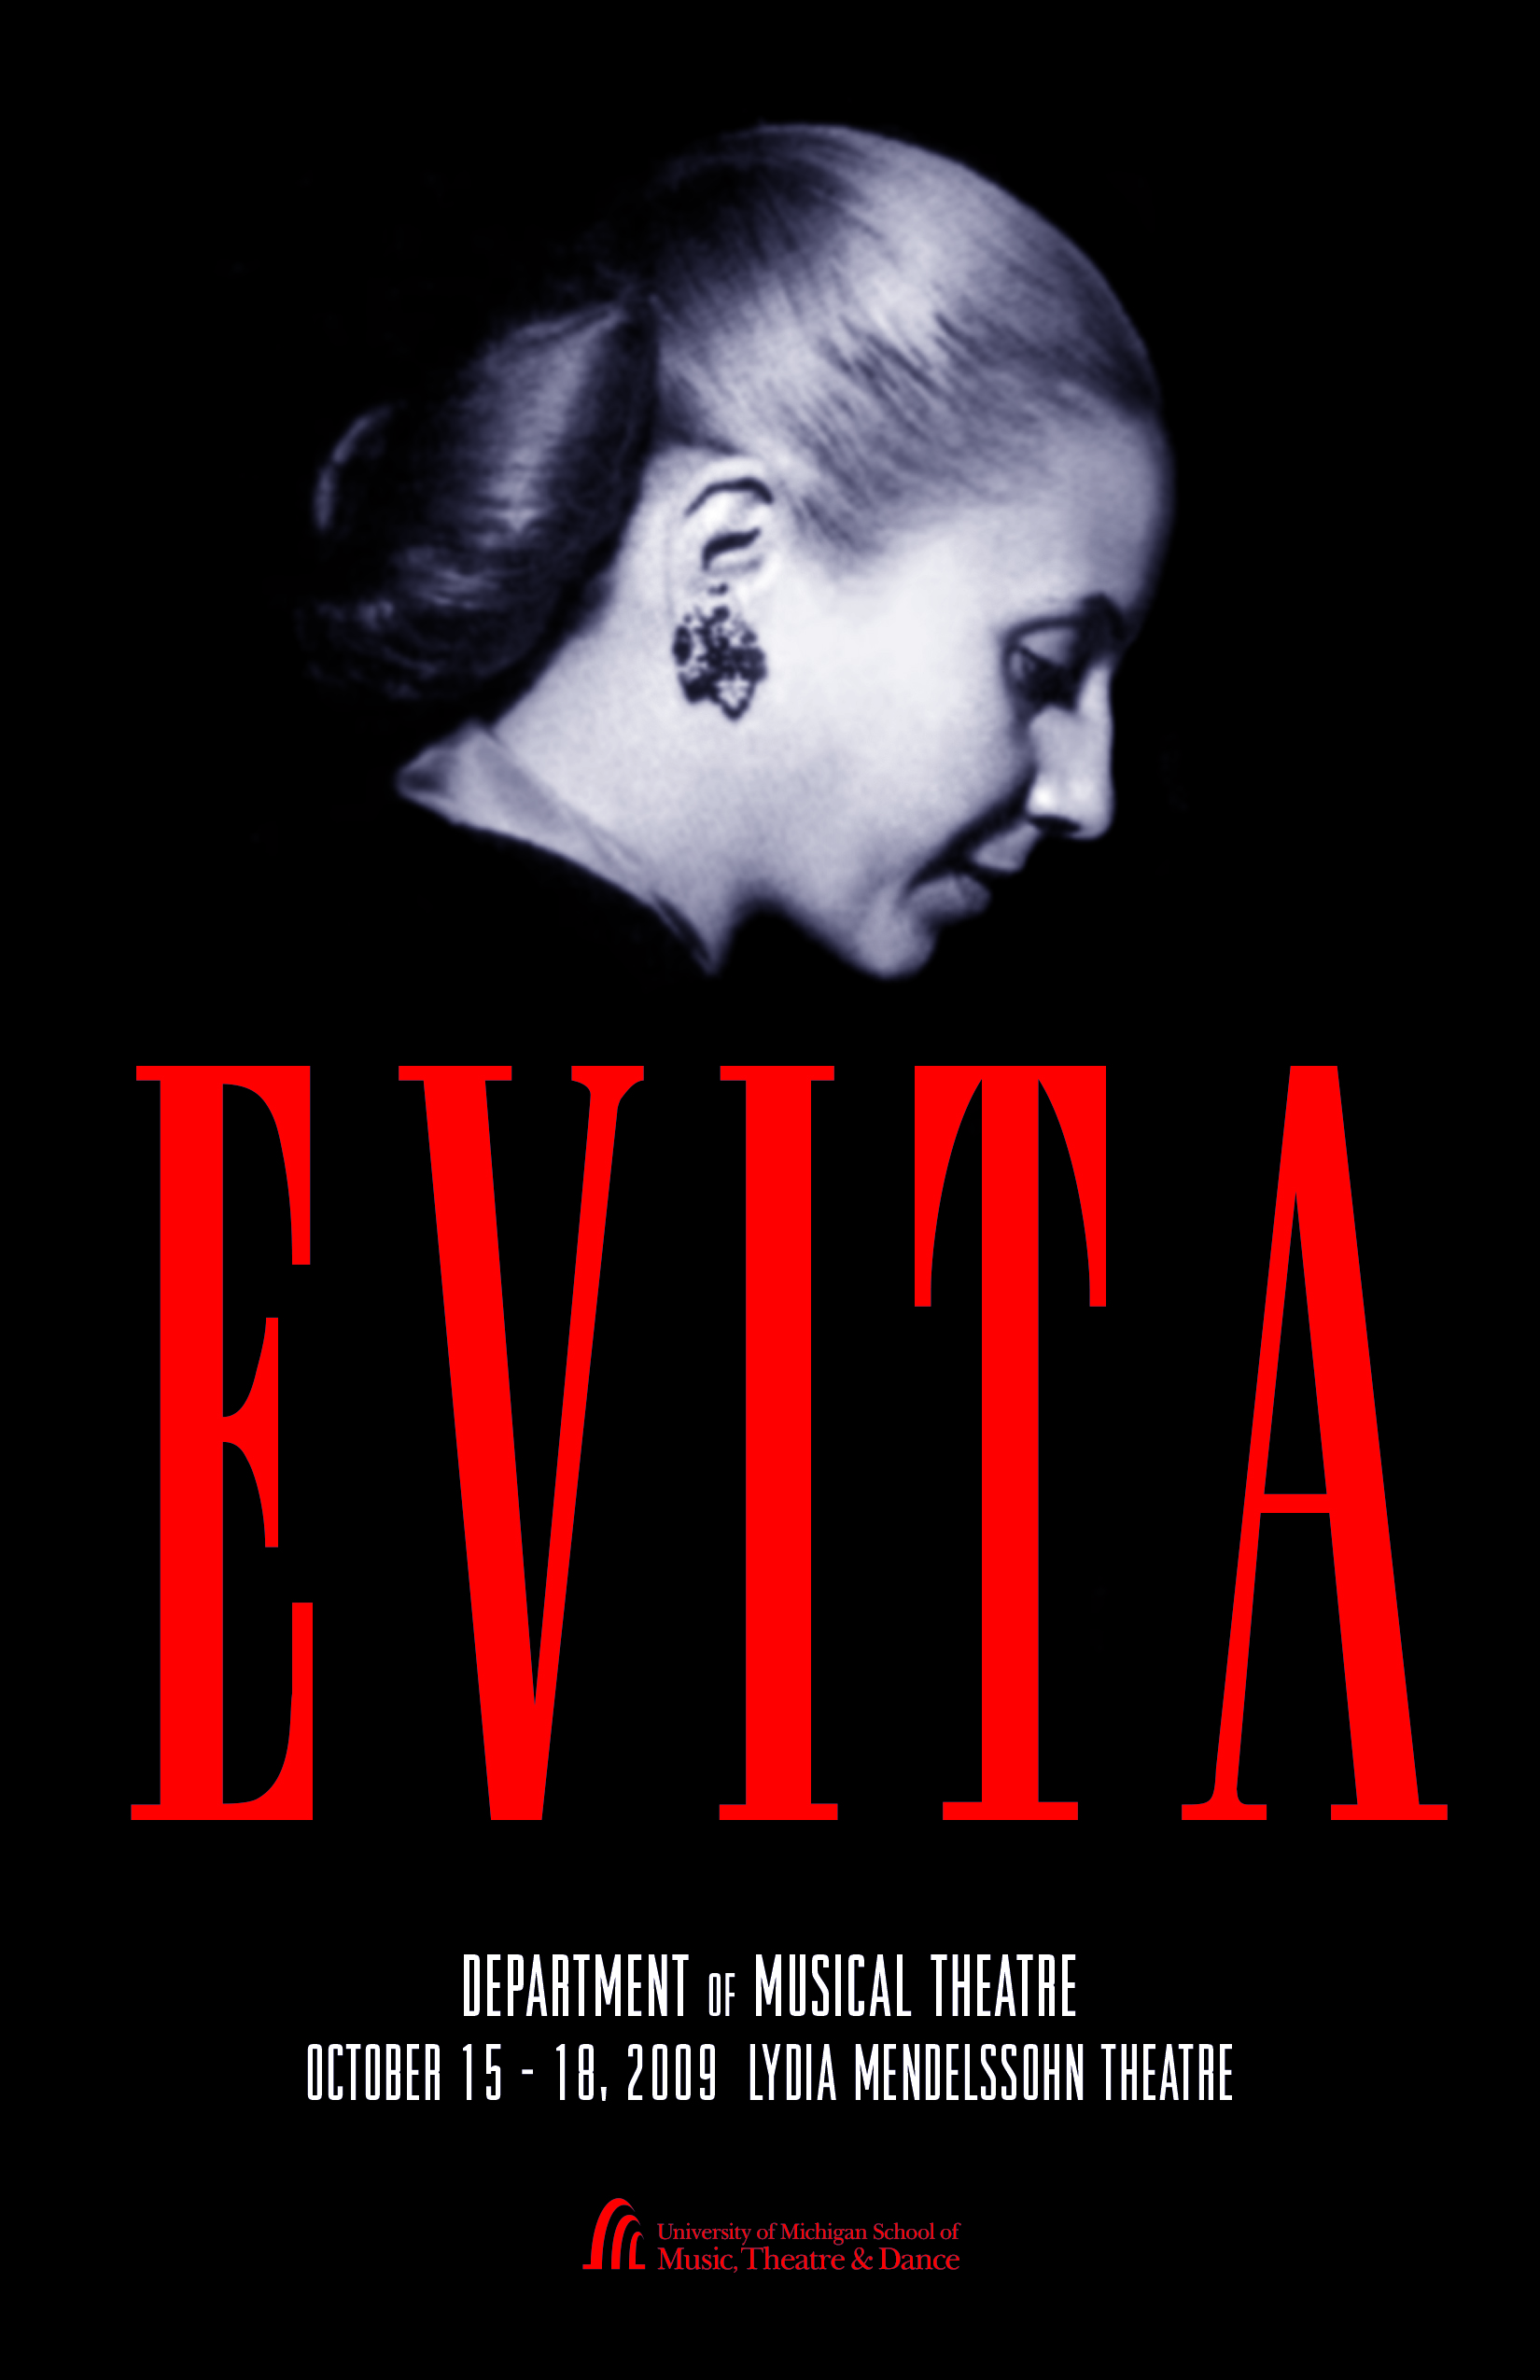 hospita Prooi nachtmerrie Evita - University of Michigan School of Music, Theatre & Dance